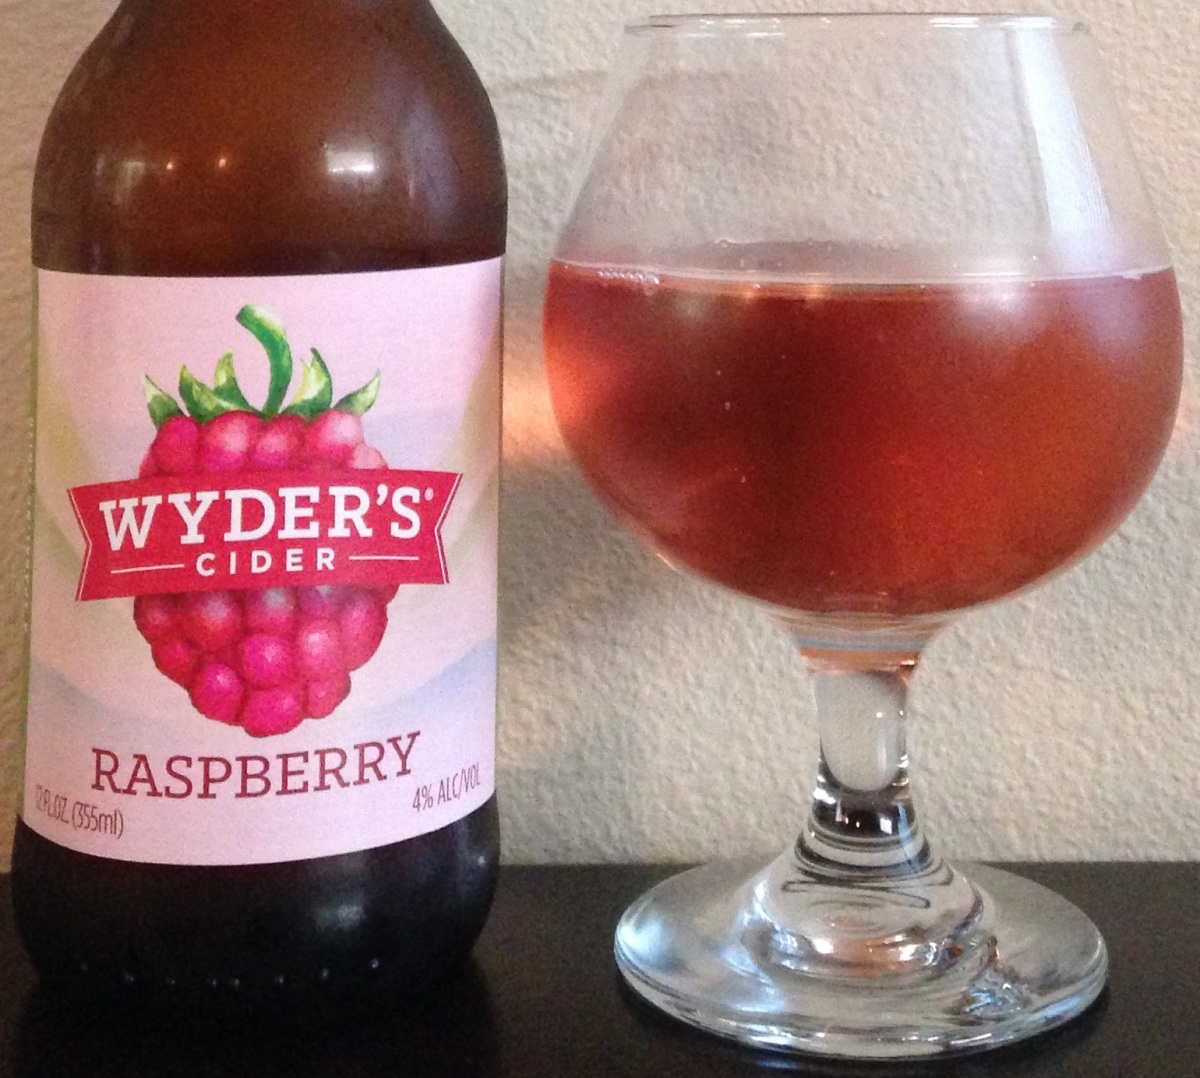 Wyder's Raspberry | Cider Says